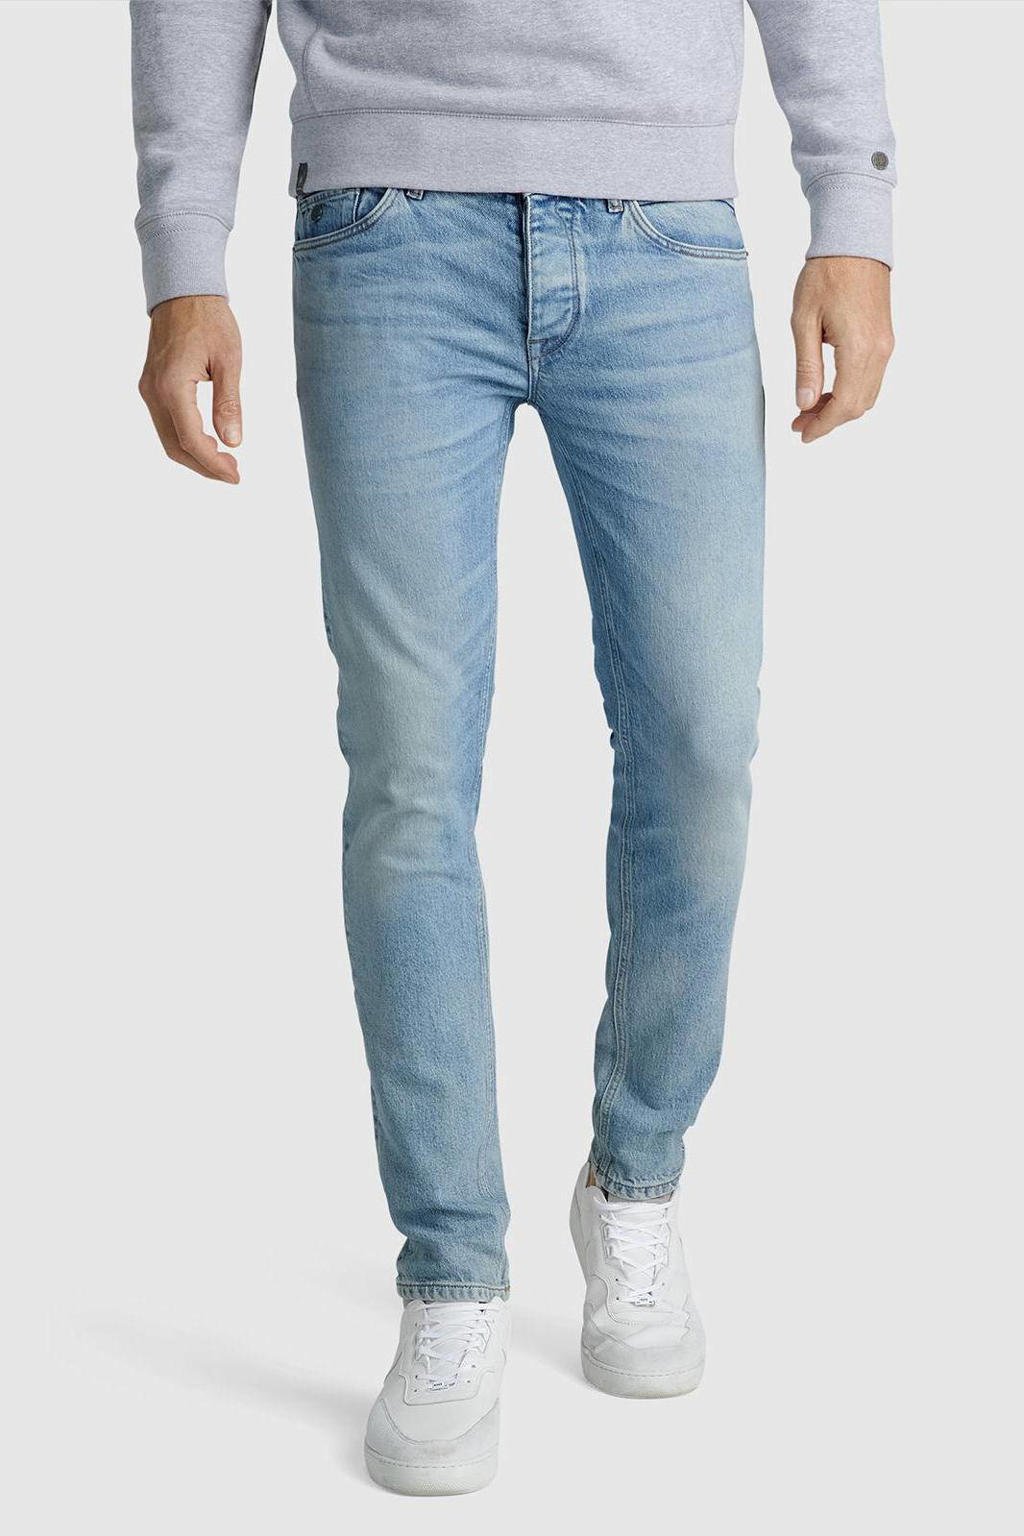 Cast Iron slim fit jeans Riser light blue ocean